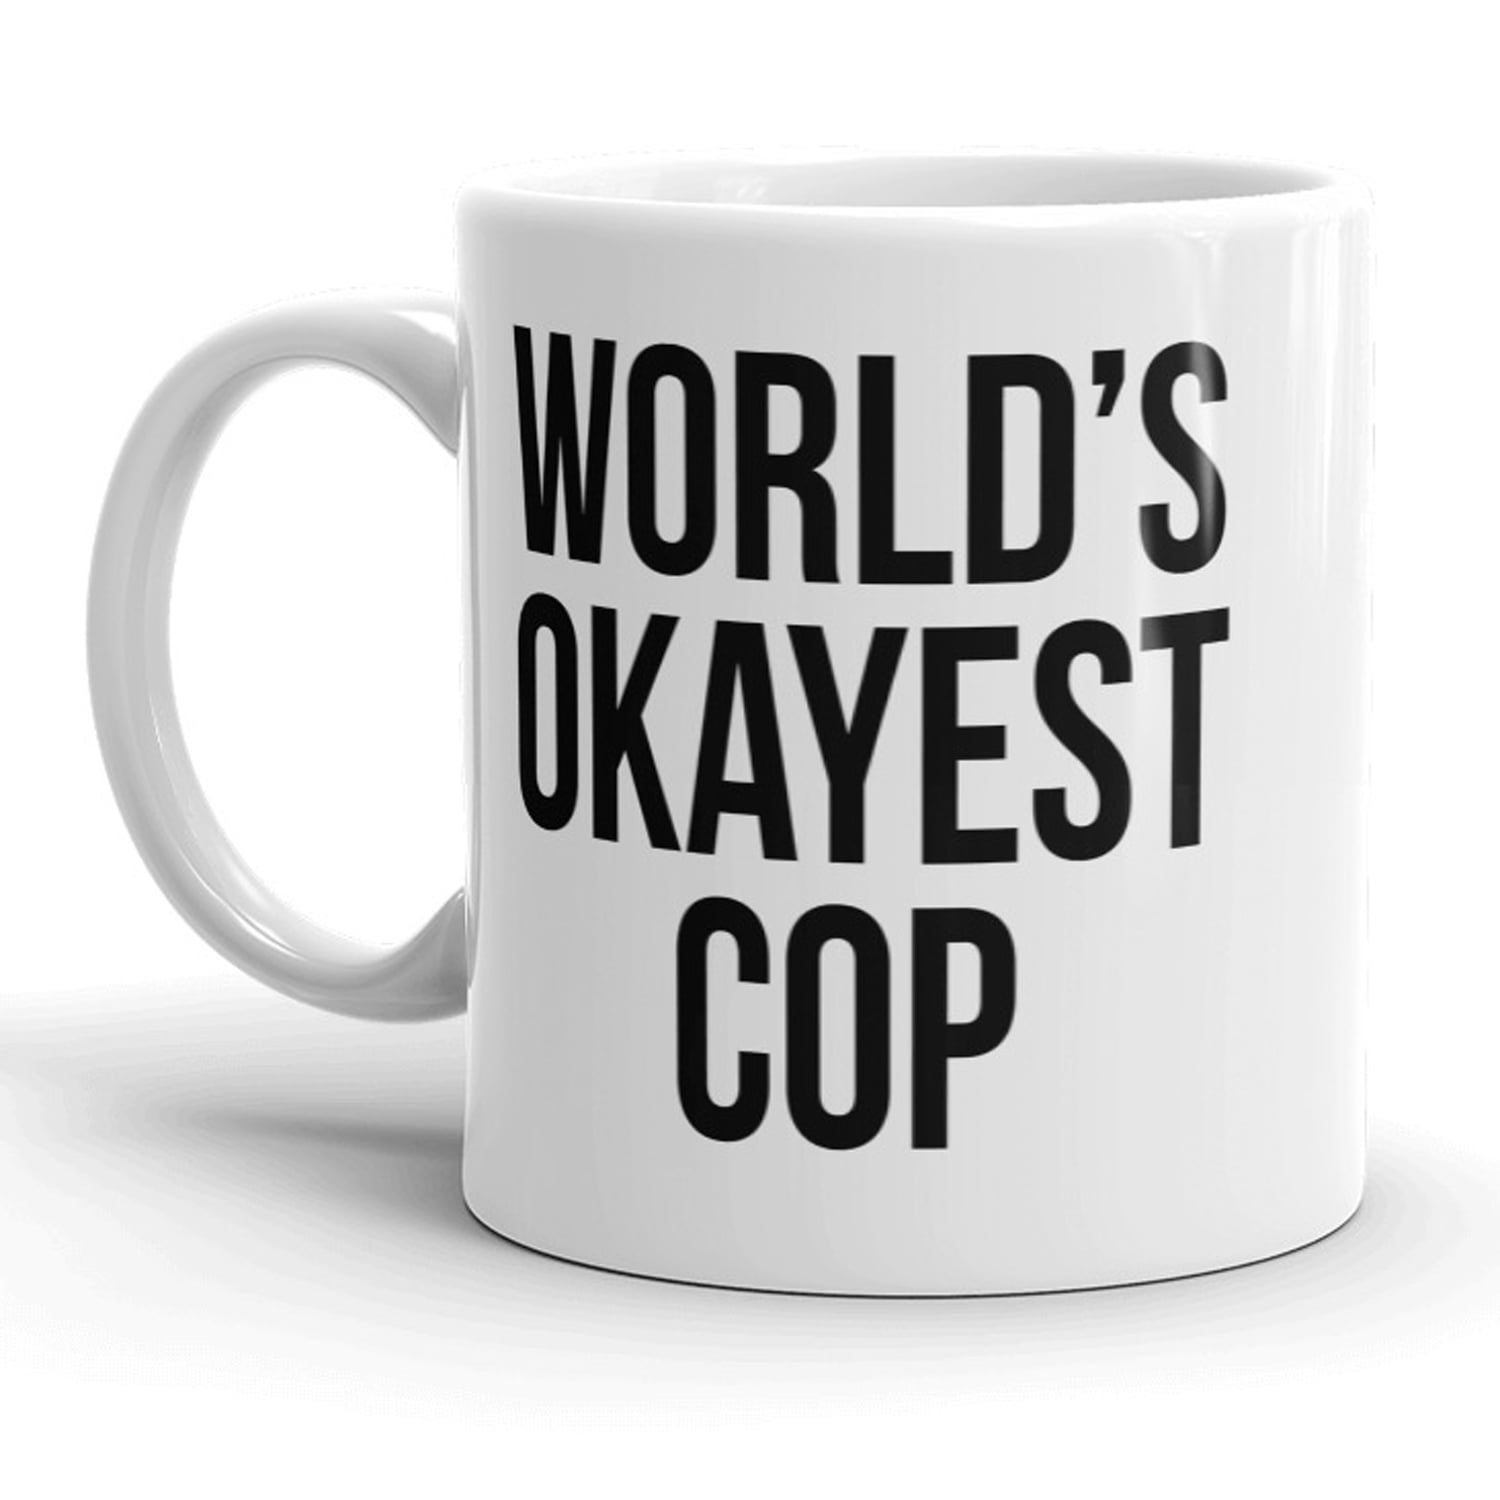 Police Officer Mug Female Officer Funny Mug Funny Mug Cop Gifts Funny Police Gift Police Academy Gift Cop Mug